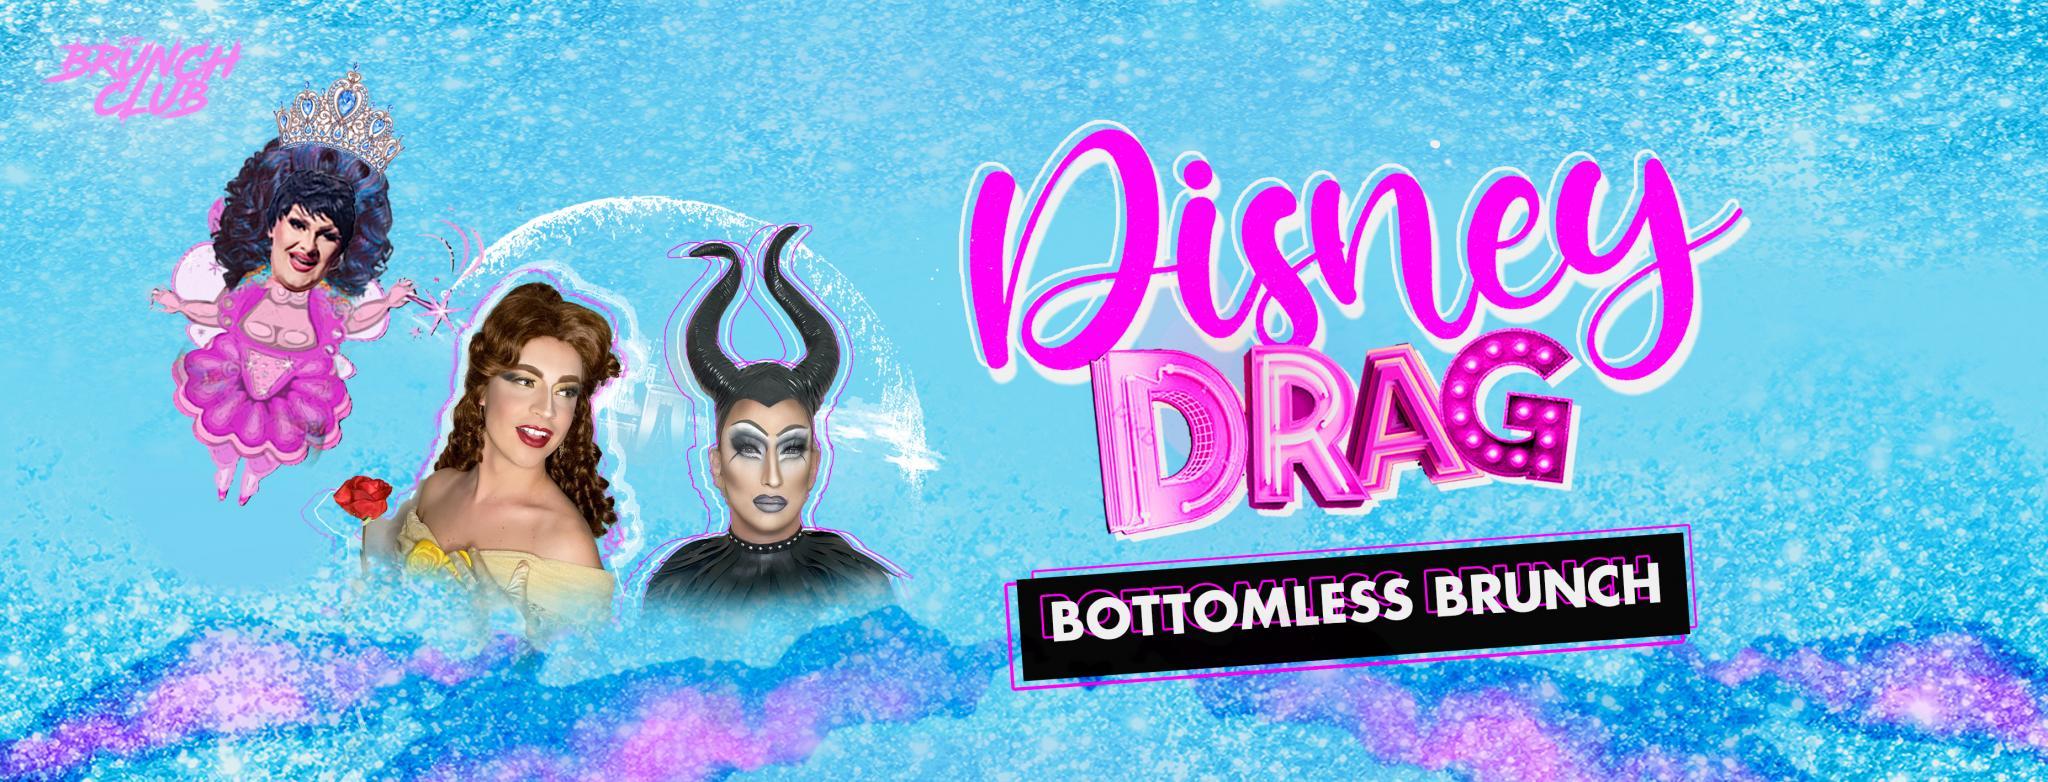 Disney Drag Bottomless Brunch - Portsmouth